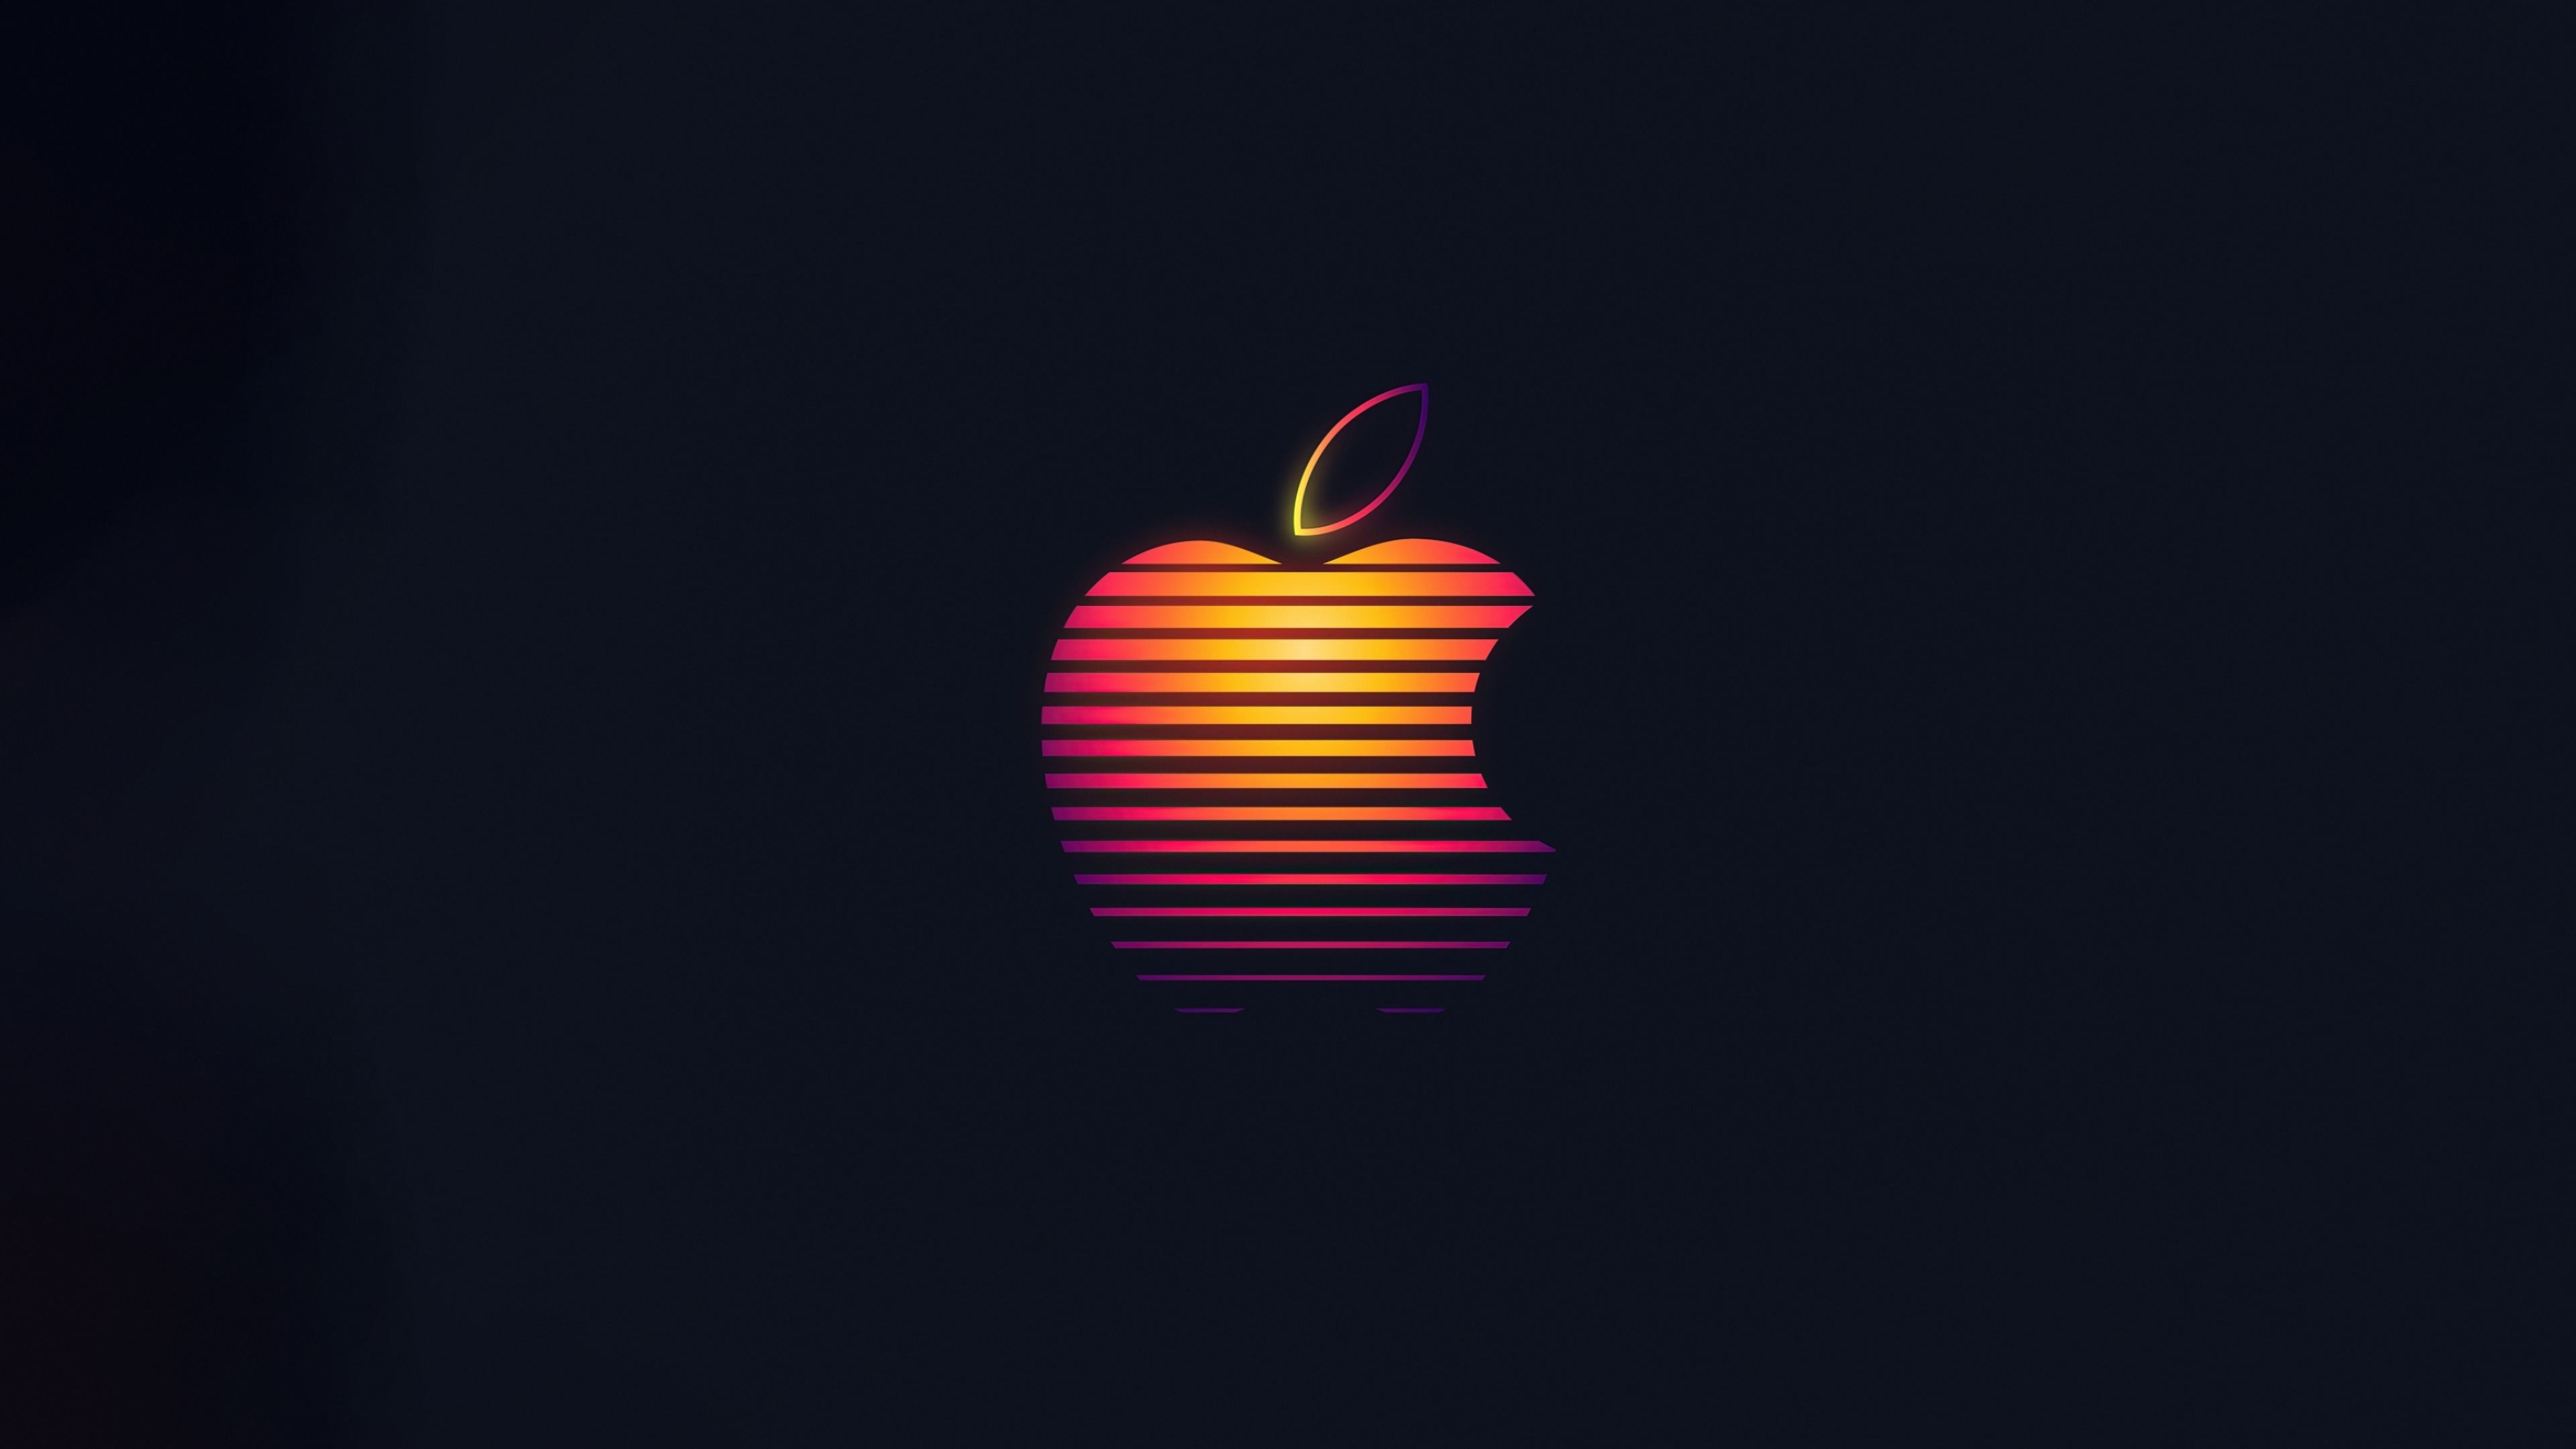 Premium Photo | Apple 15 logo background dark 4k wallpaper